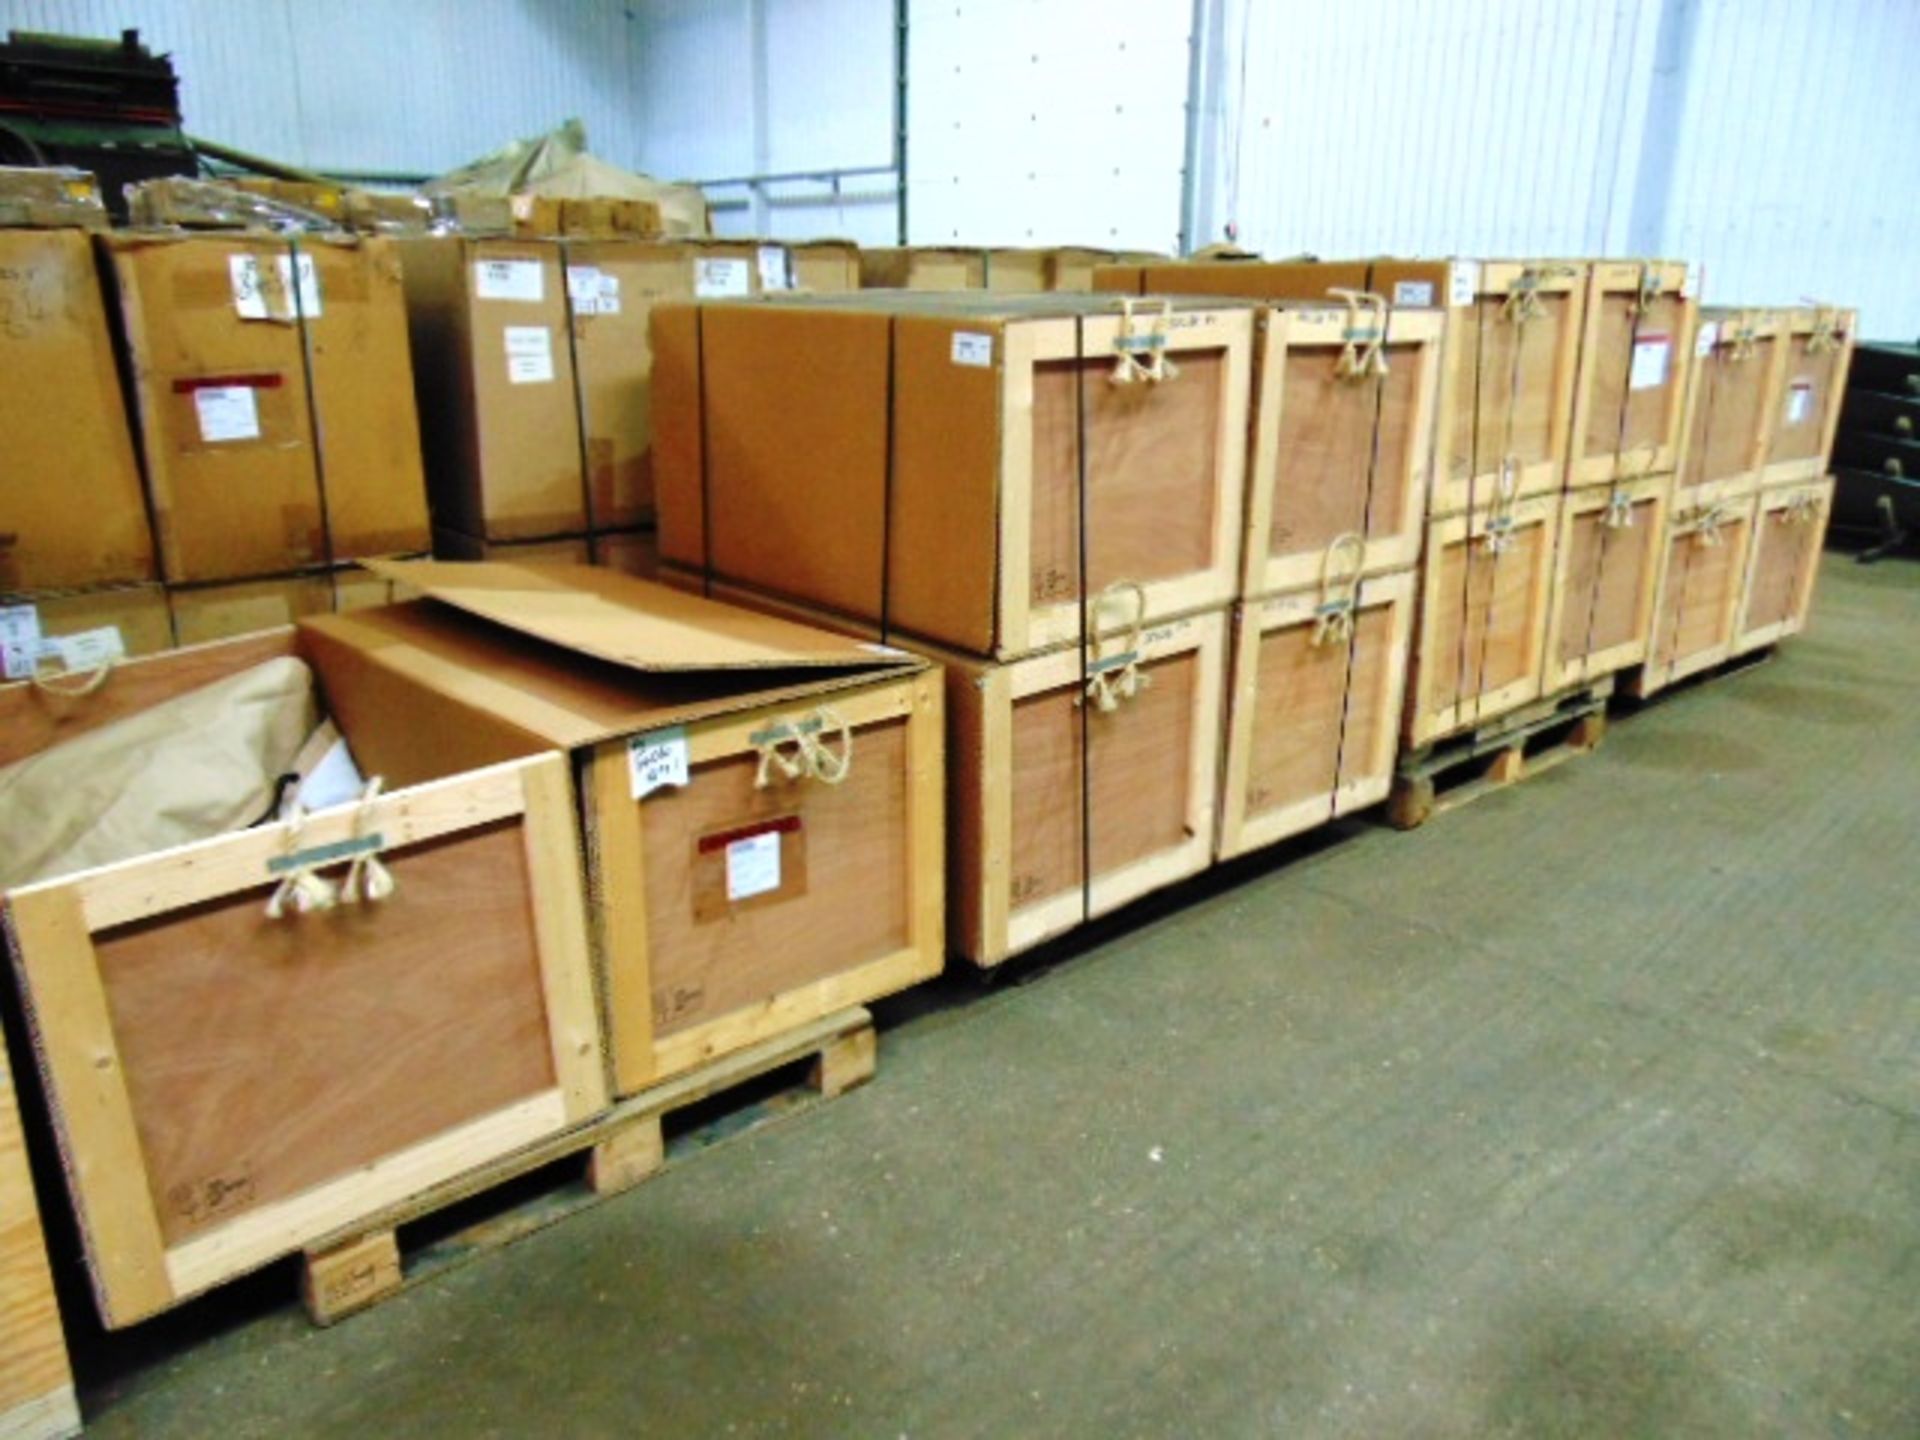 14 x Supacat Upgrade Kits C/W Shipping Crates